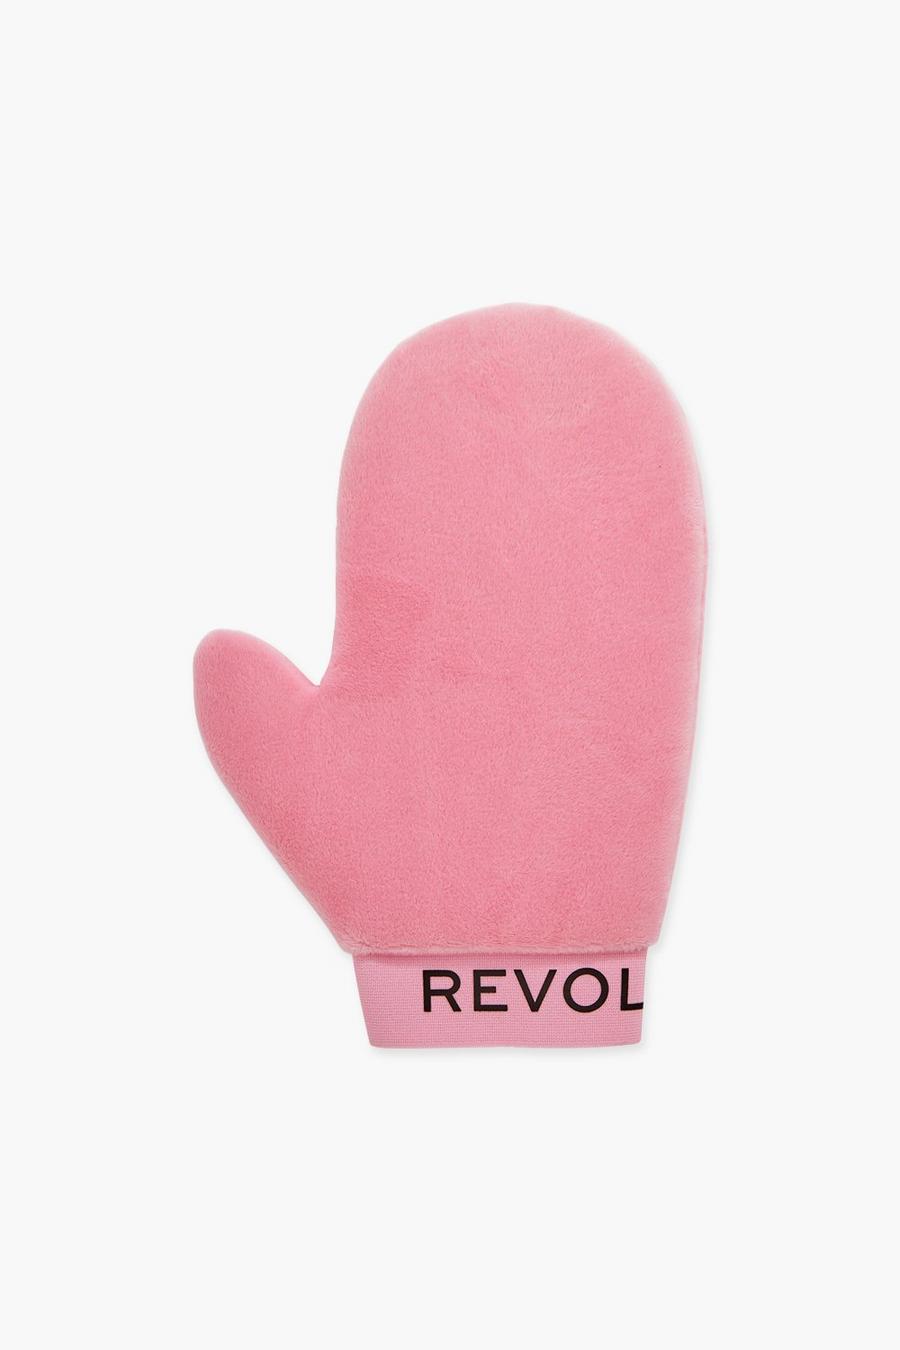 Revolution Beauty Tanning Handschuh Pink image number 1